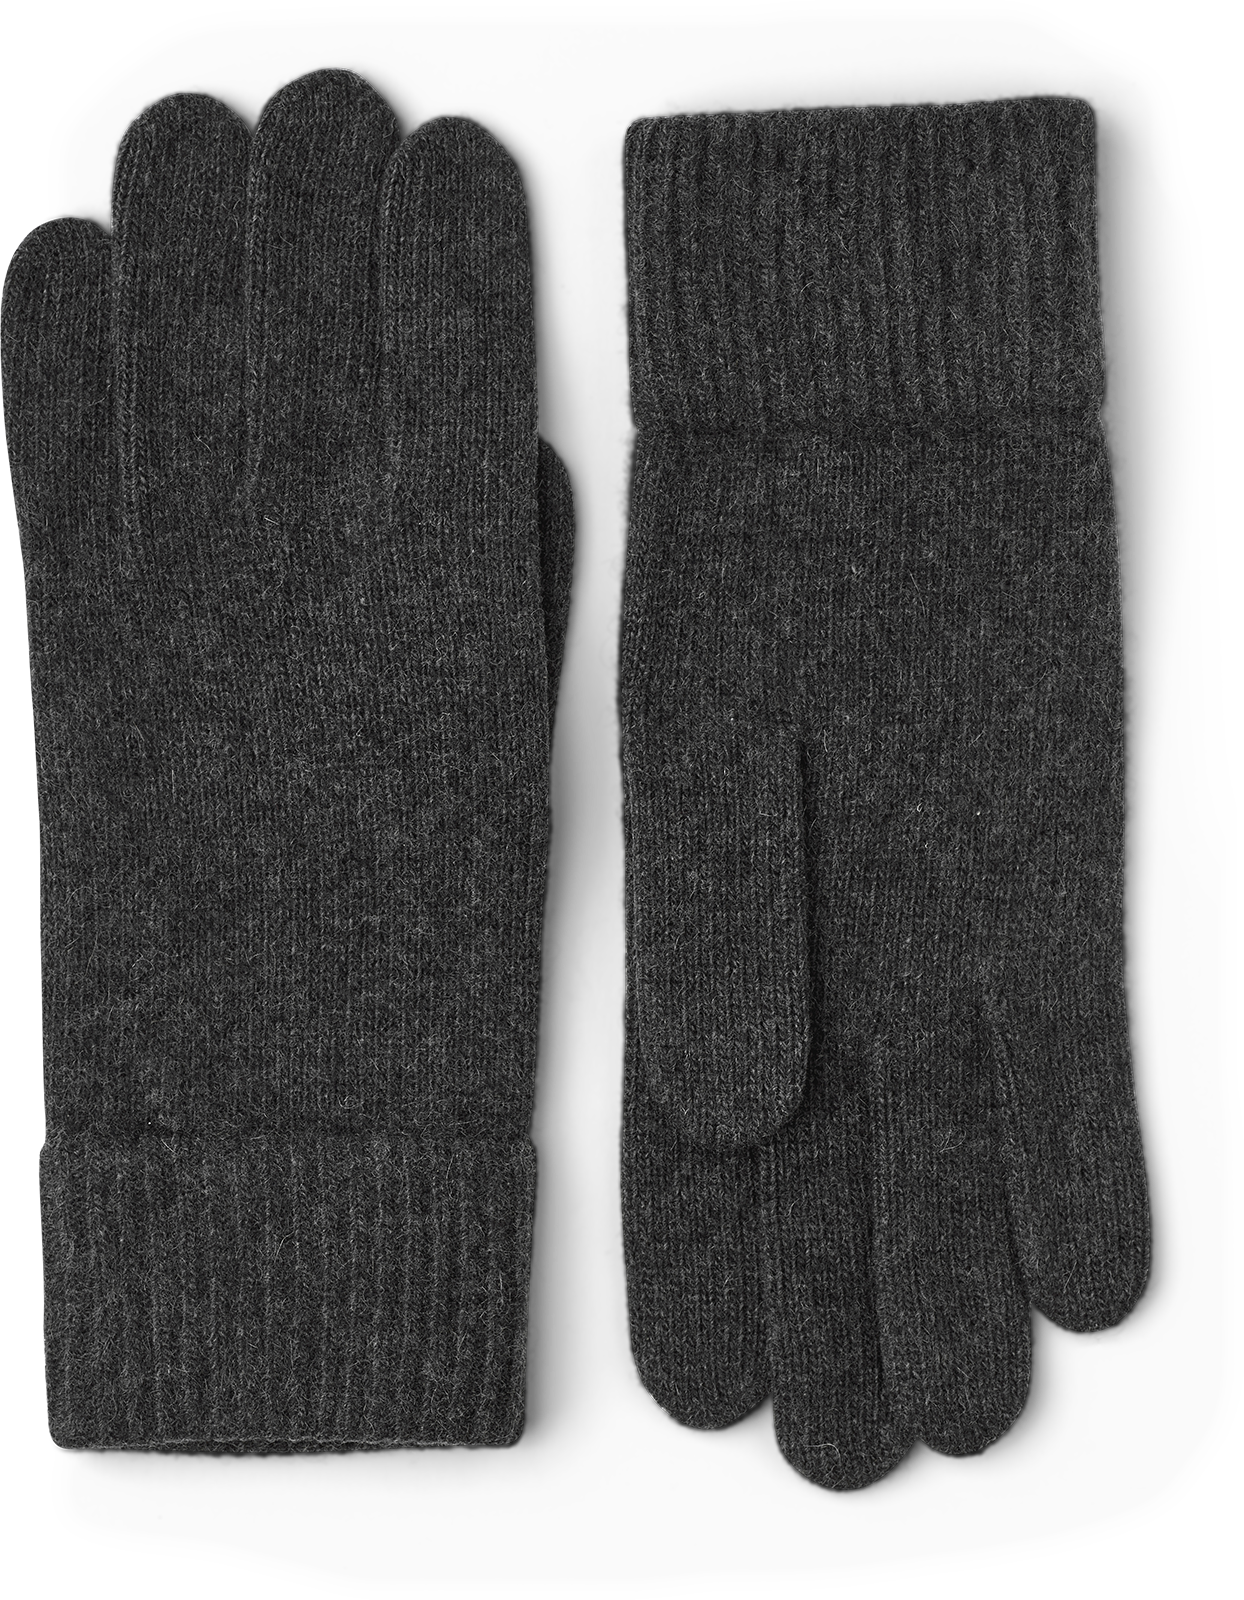 Men's cashmere glove 2½ Bt - Charcoal